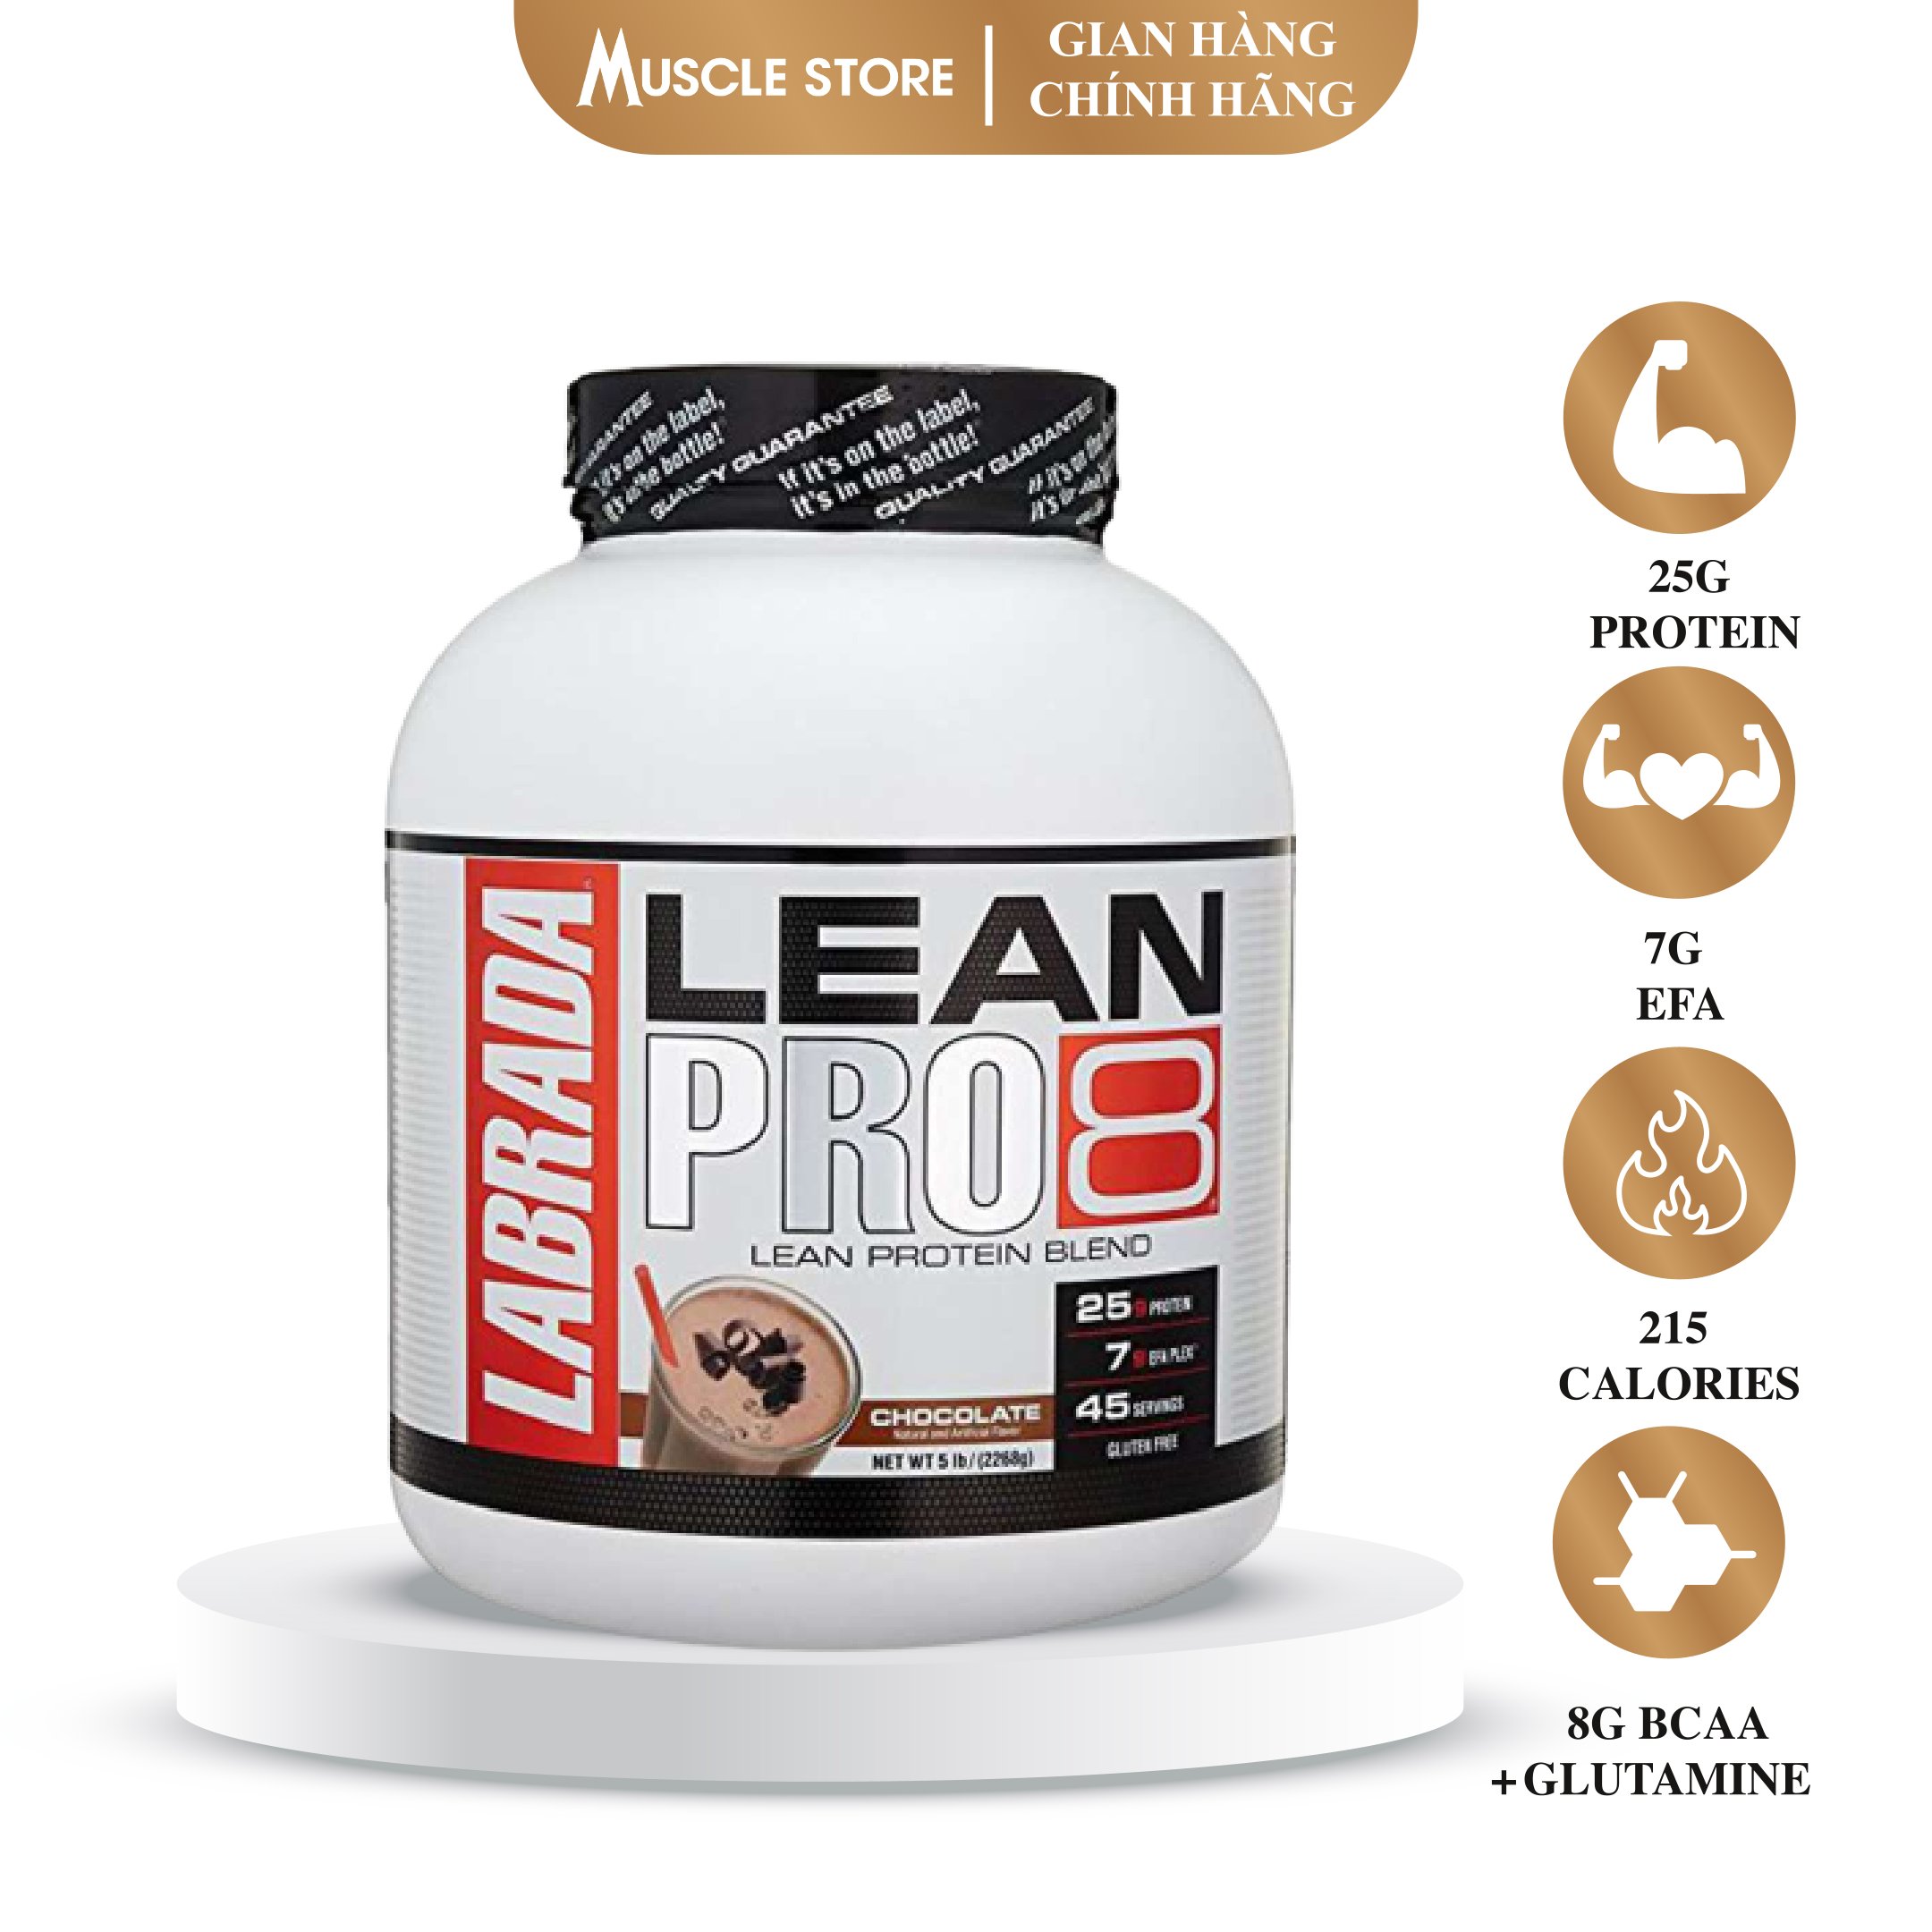 Lean Pro 8 - Labrada, Bổ Sung 8 Loại Whey Protein Cao Cấp Trải Dài, Casein